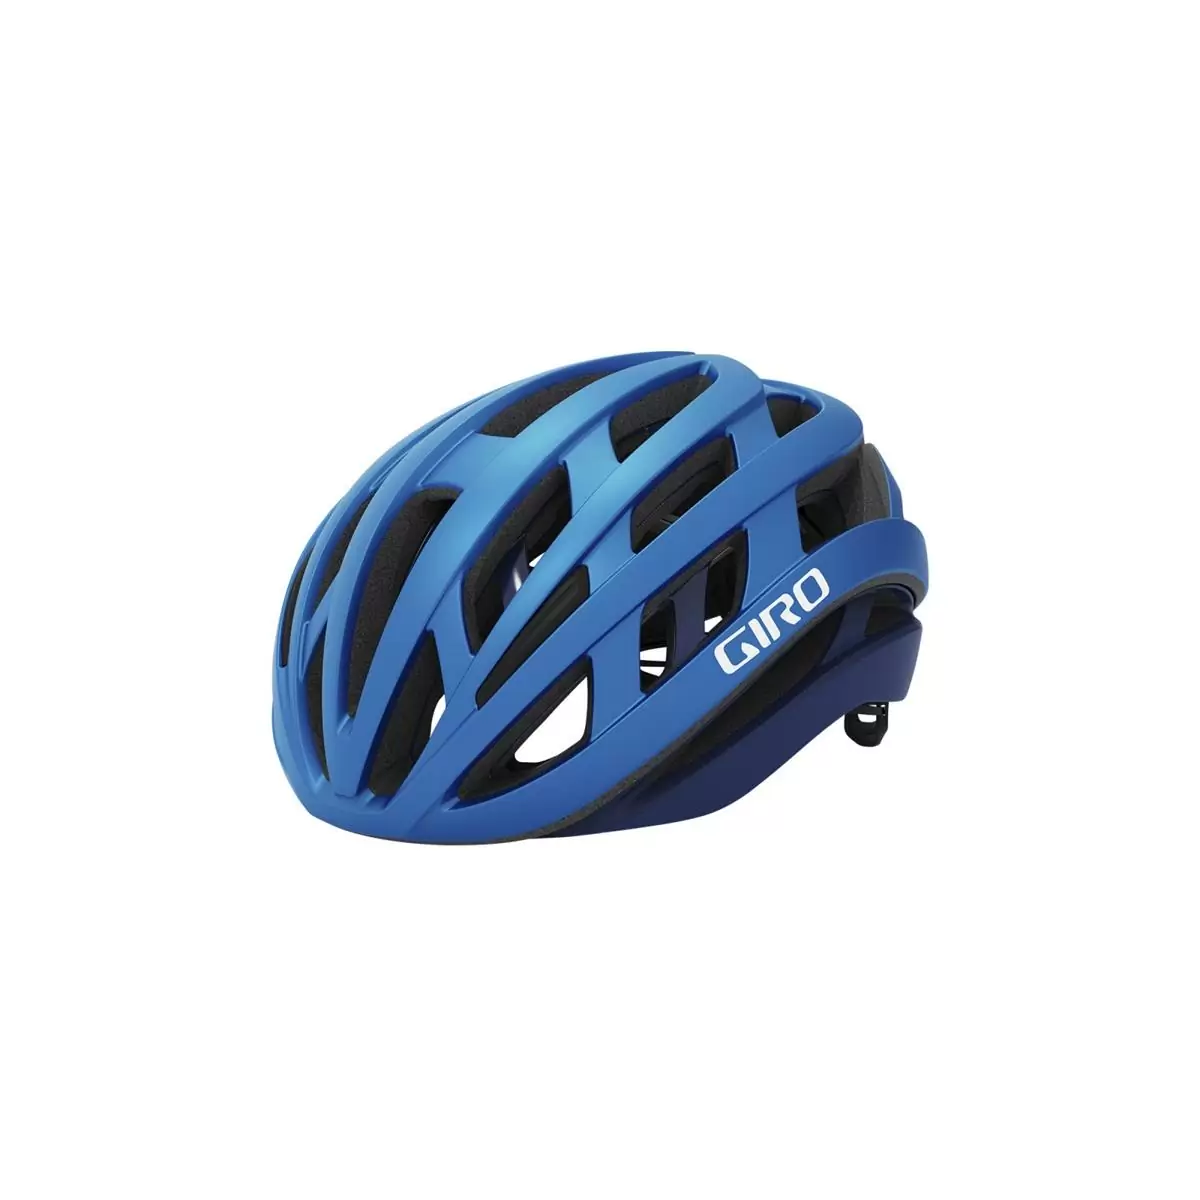 Helmet Helios Spherical Blue Size L (59-63cm) - image